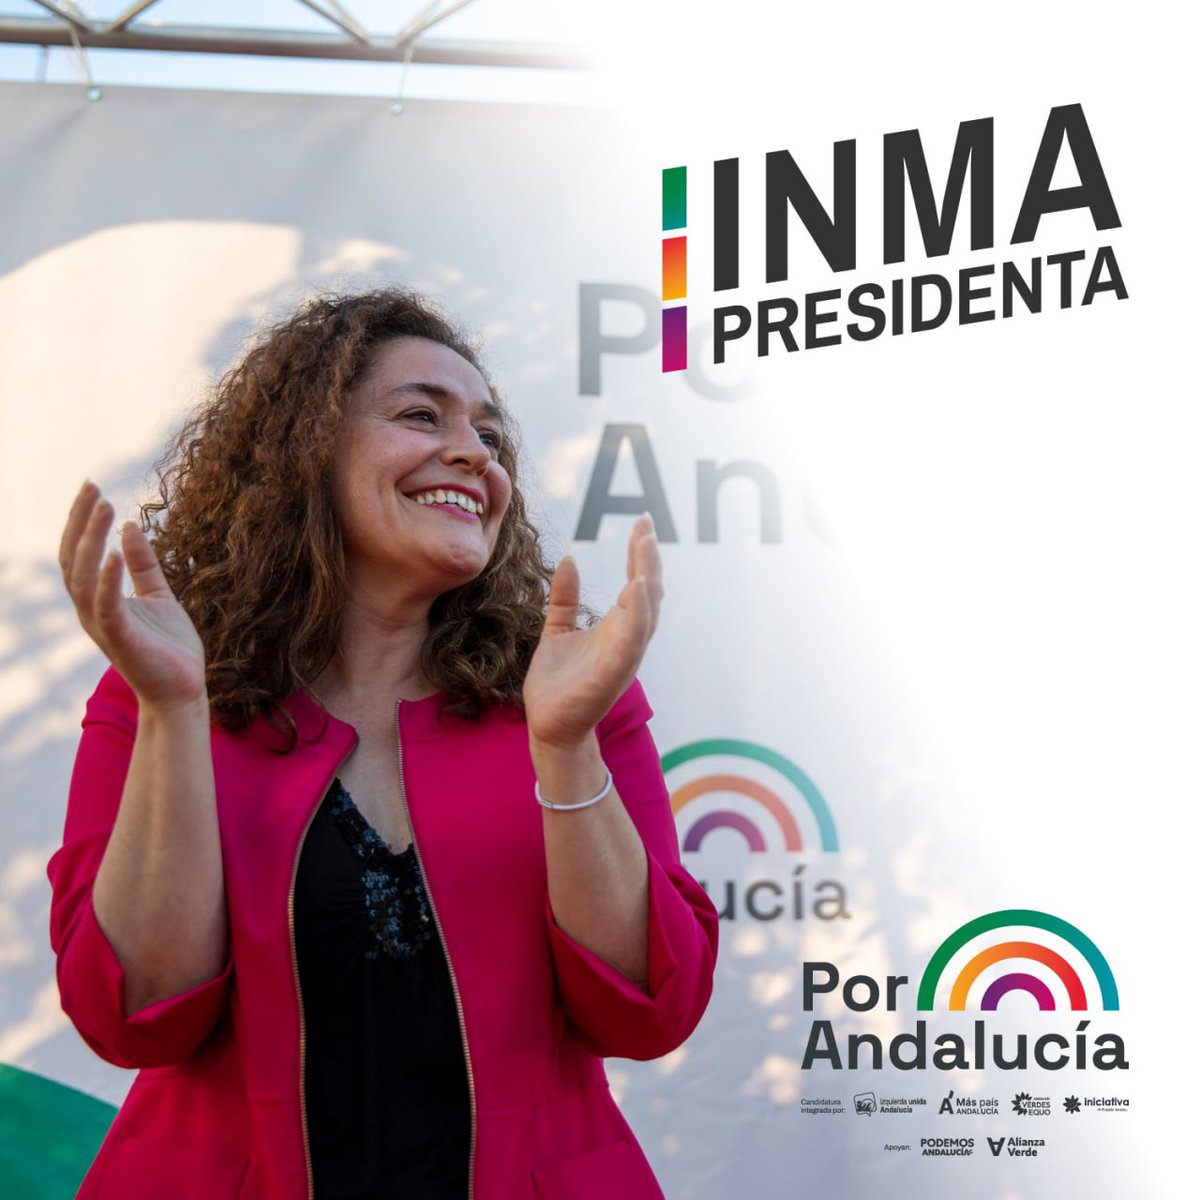 #InmaPresidenta 💚
#VotaPorAndalucía 🌈